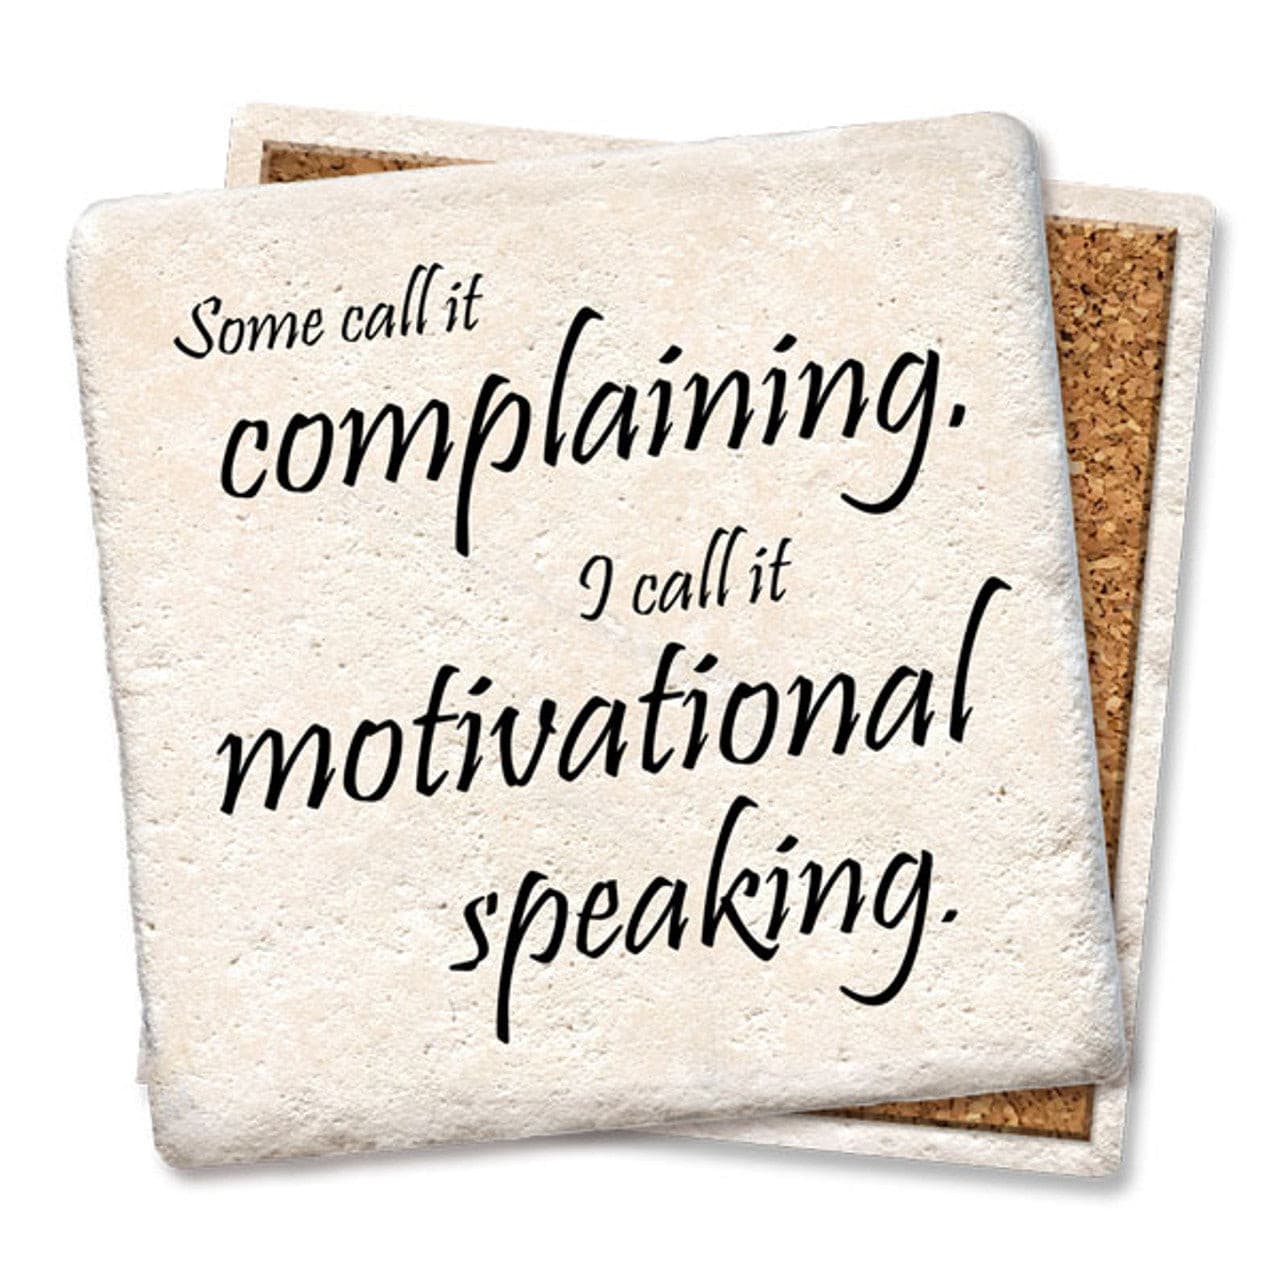 Motivational Speaking Funny Coaster